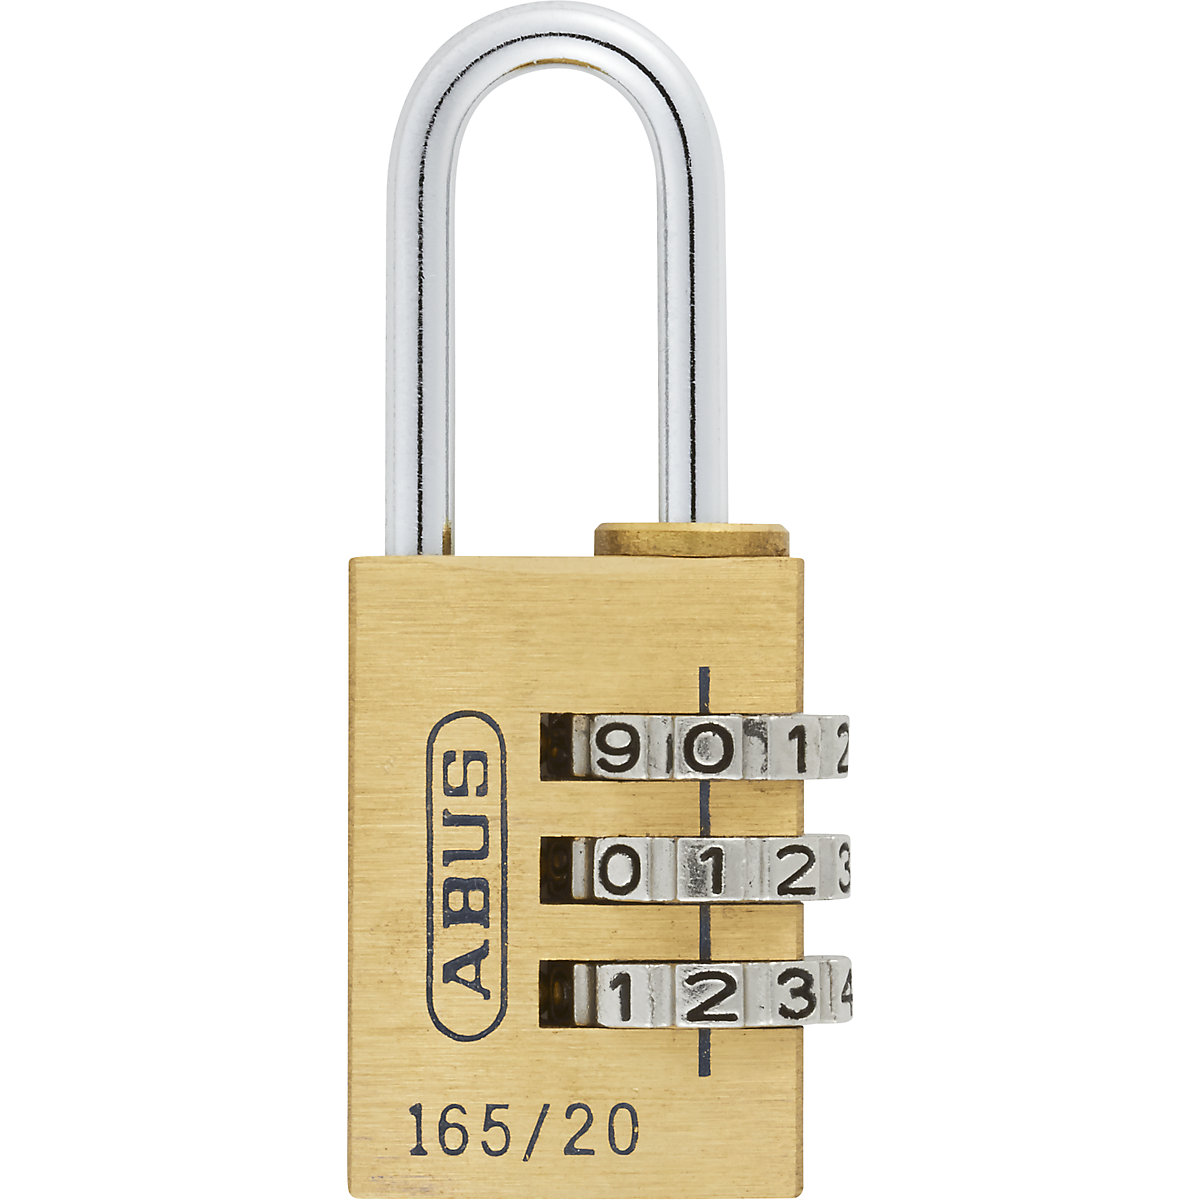 Combination lock - ABUS